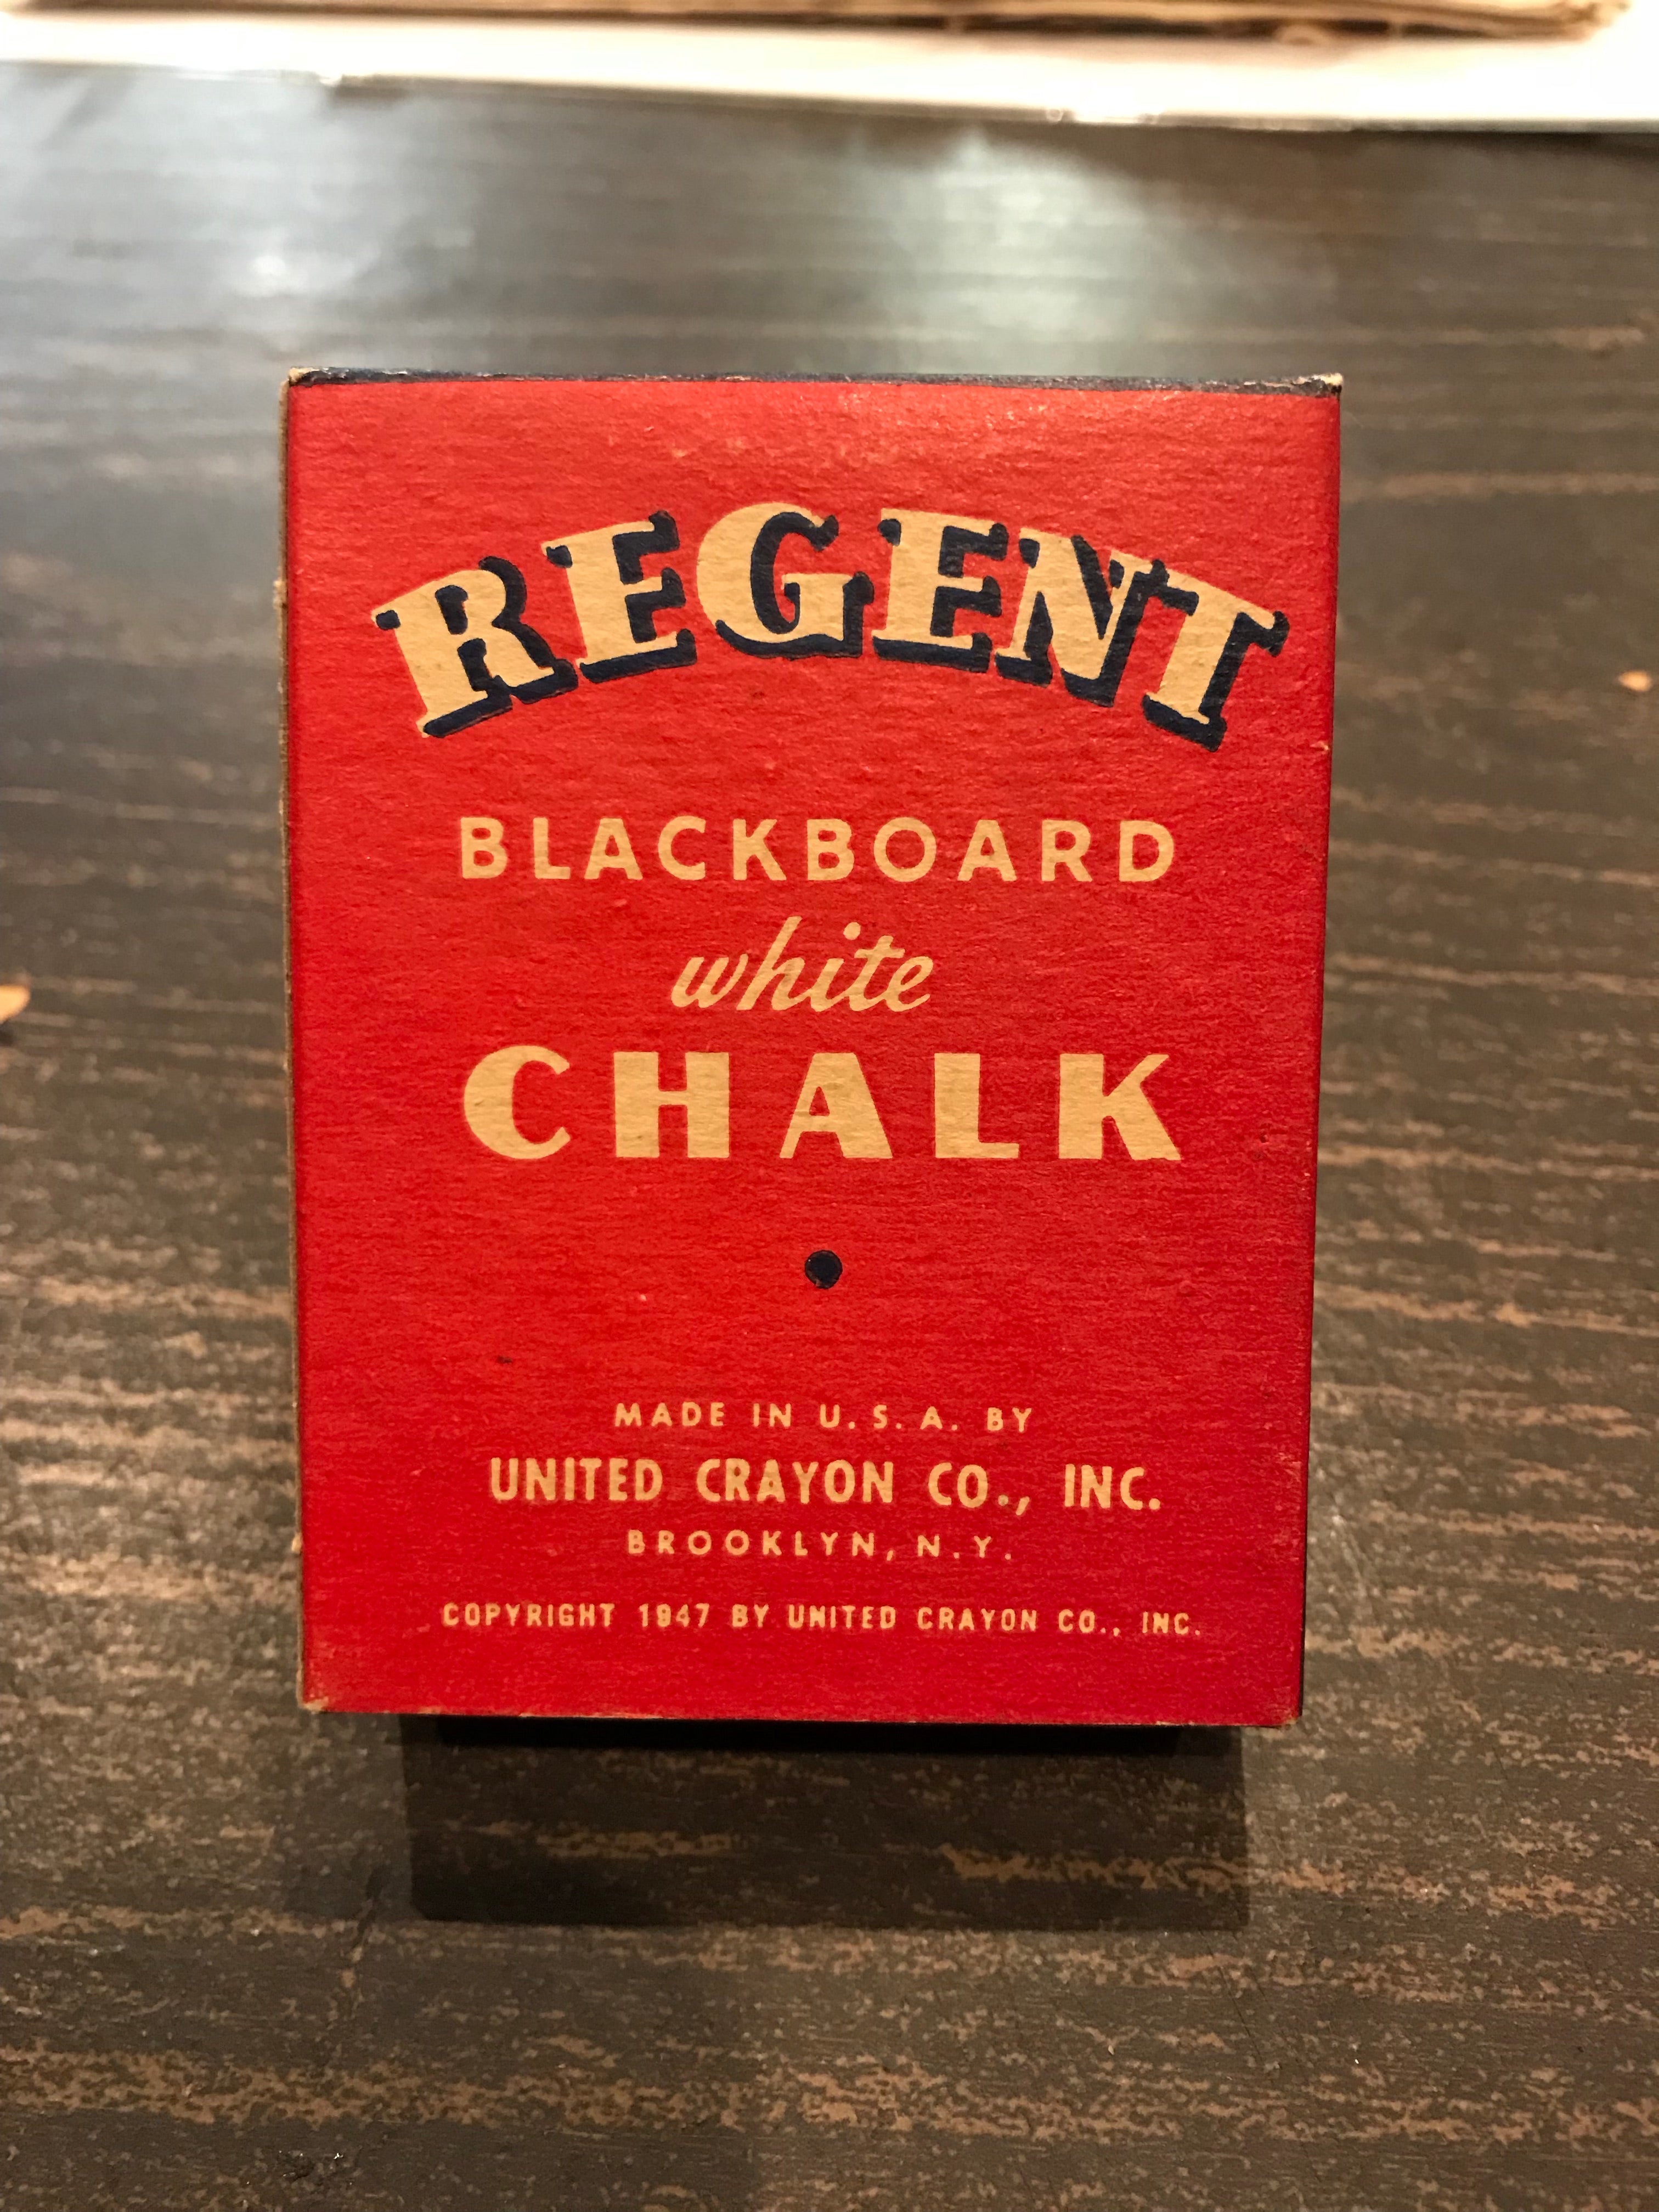 Blackboard Chalk Box